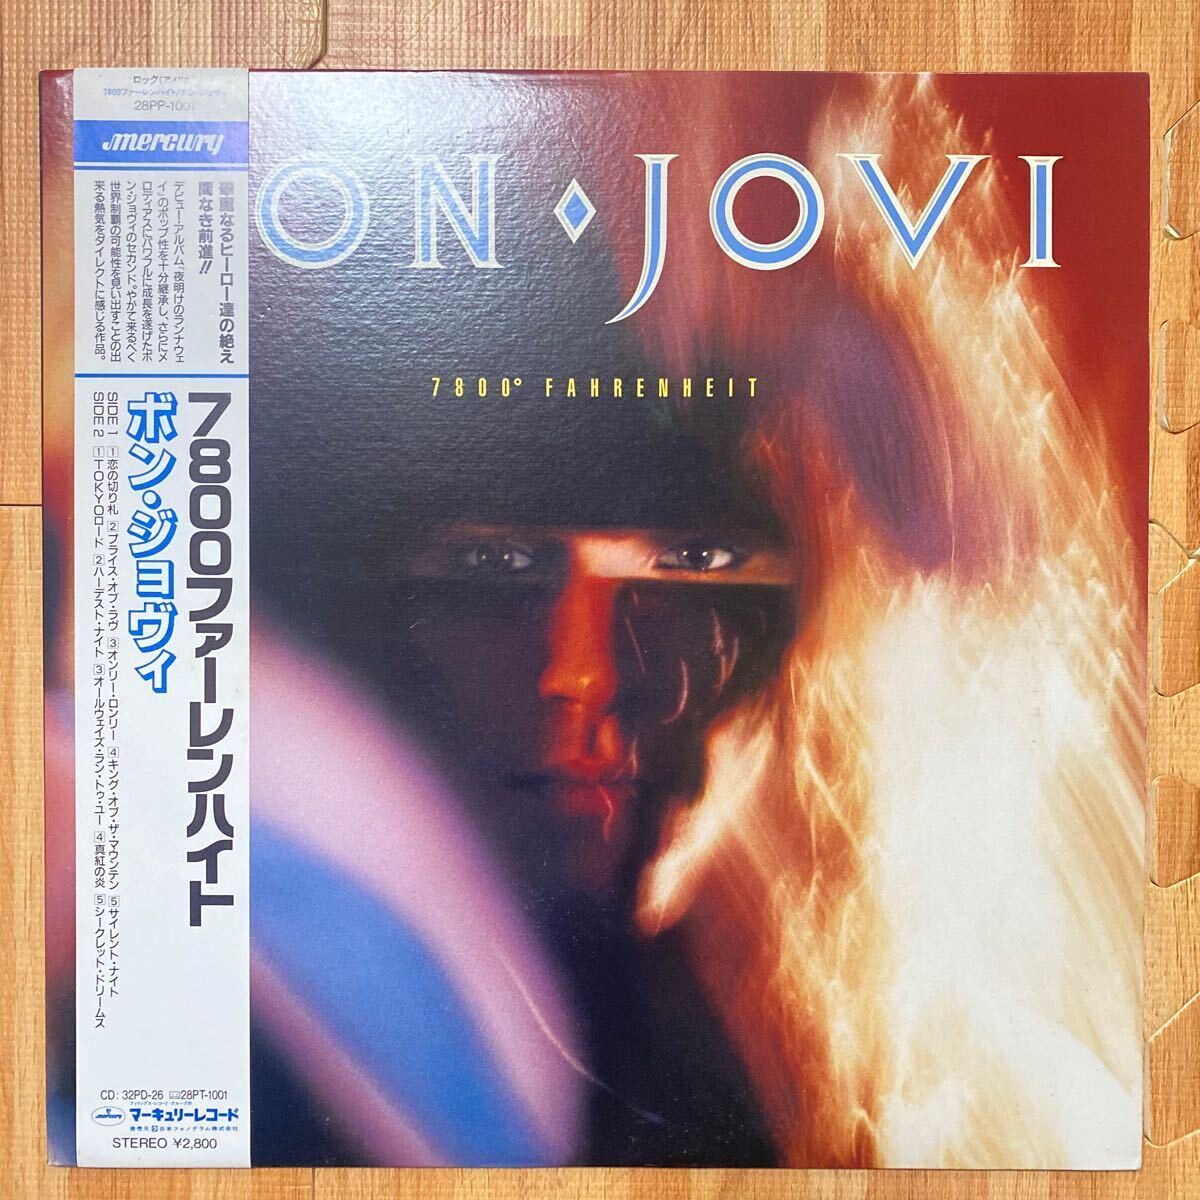 Bon Jovi ボン・ジョヴィ 7800 Fahrenheit レコード LP 帯付き OBI 28PP-1001_画像1